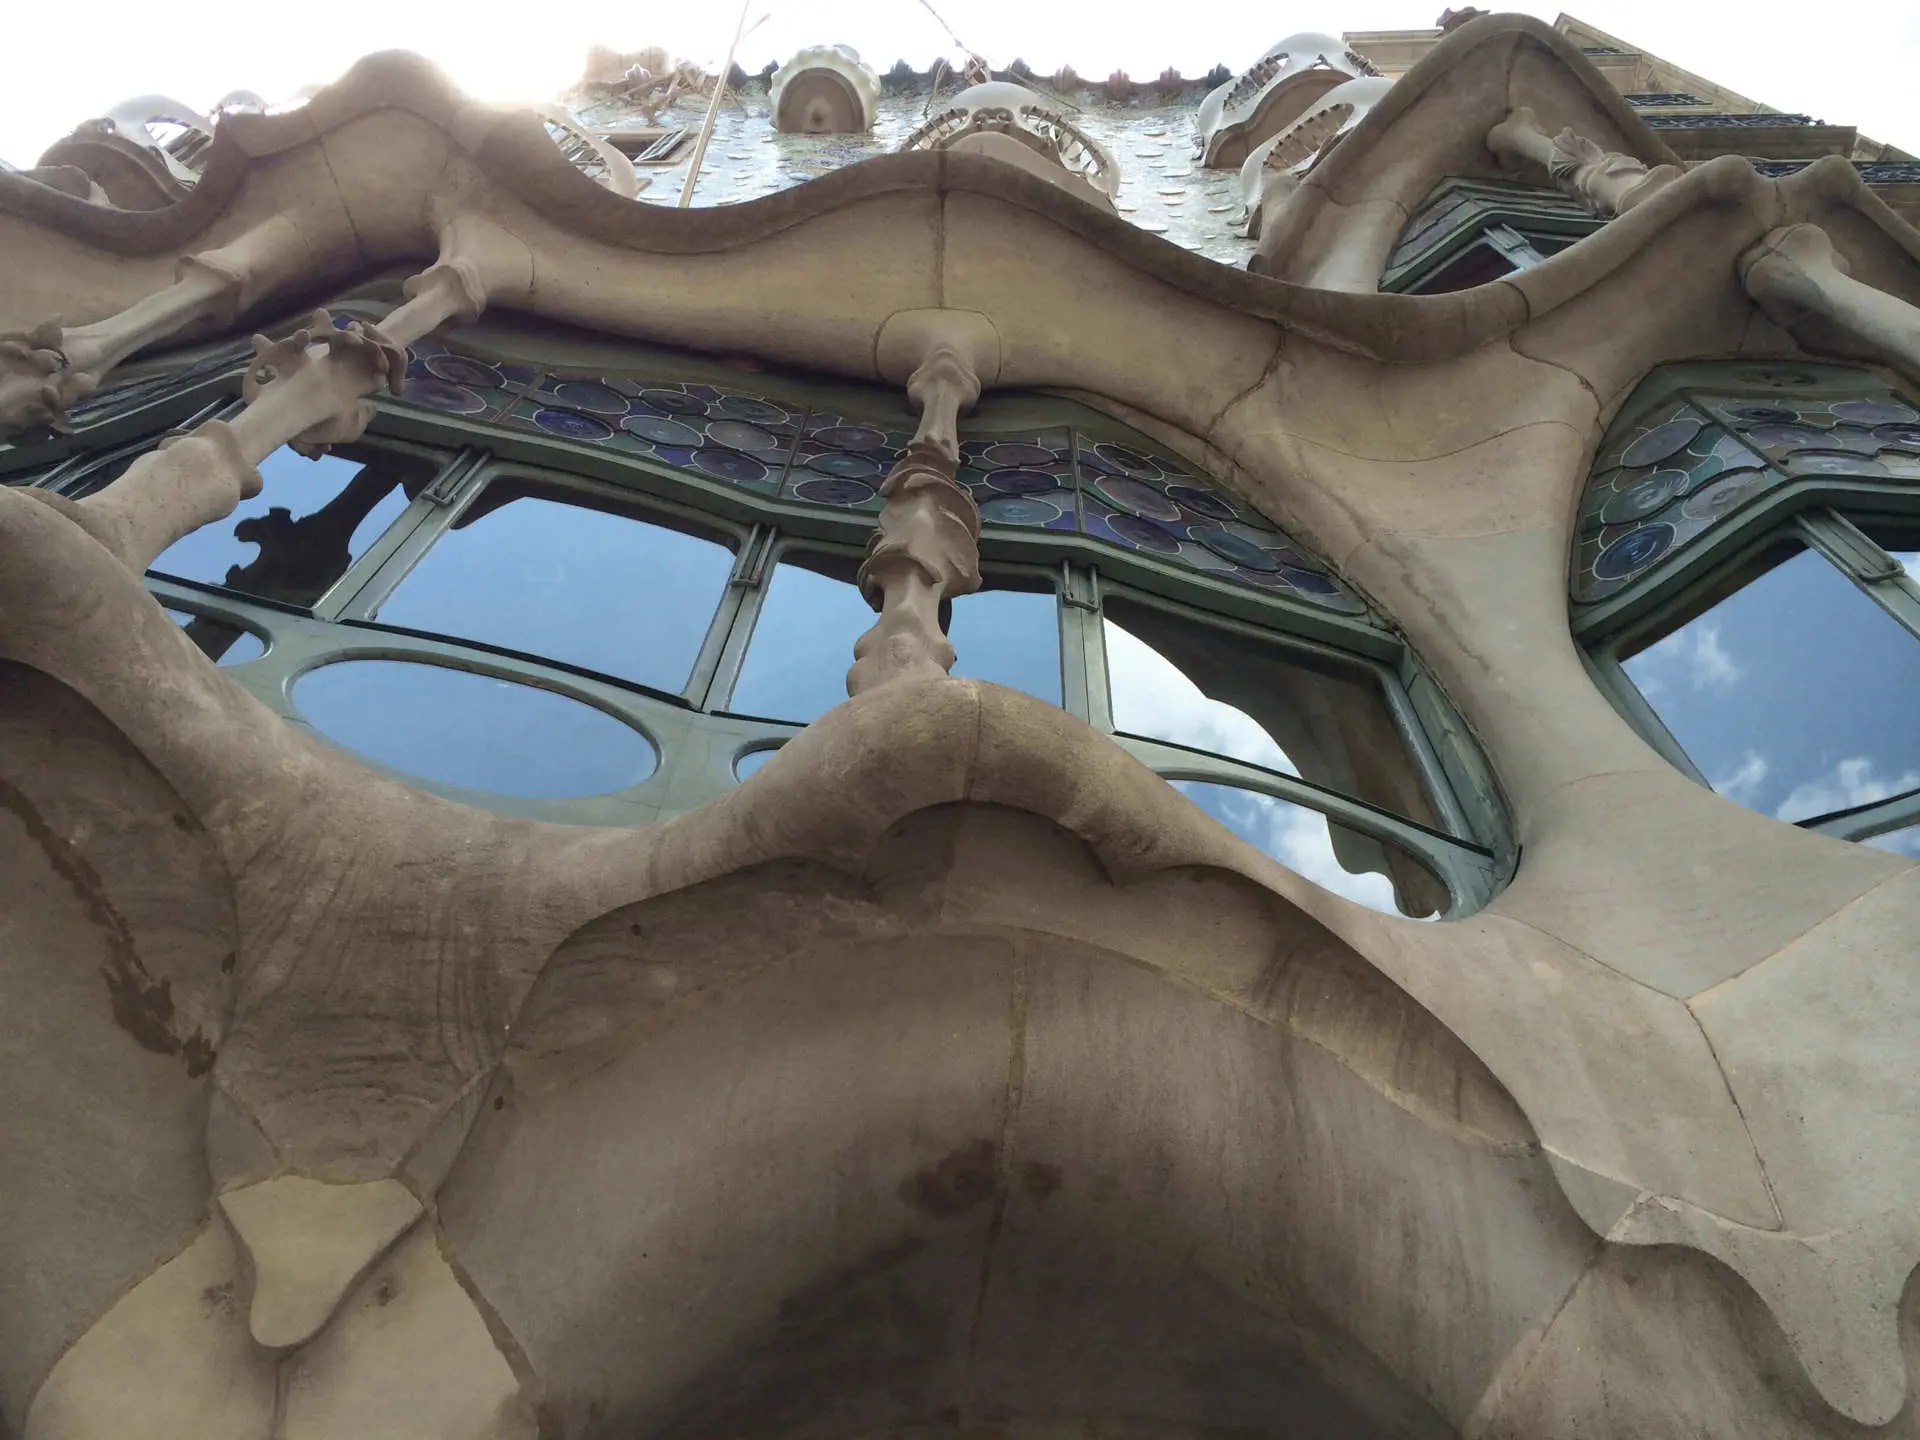 Barcelona Gaudi Architecture Buildings 2